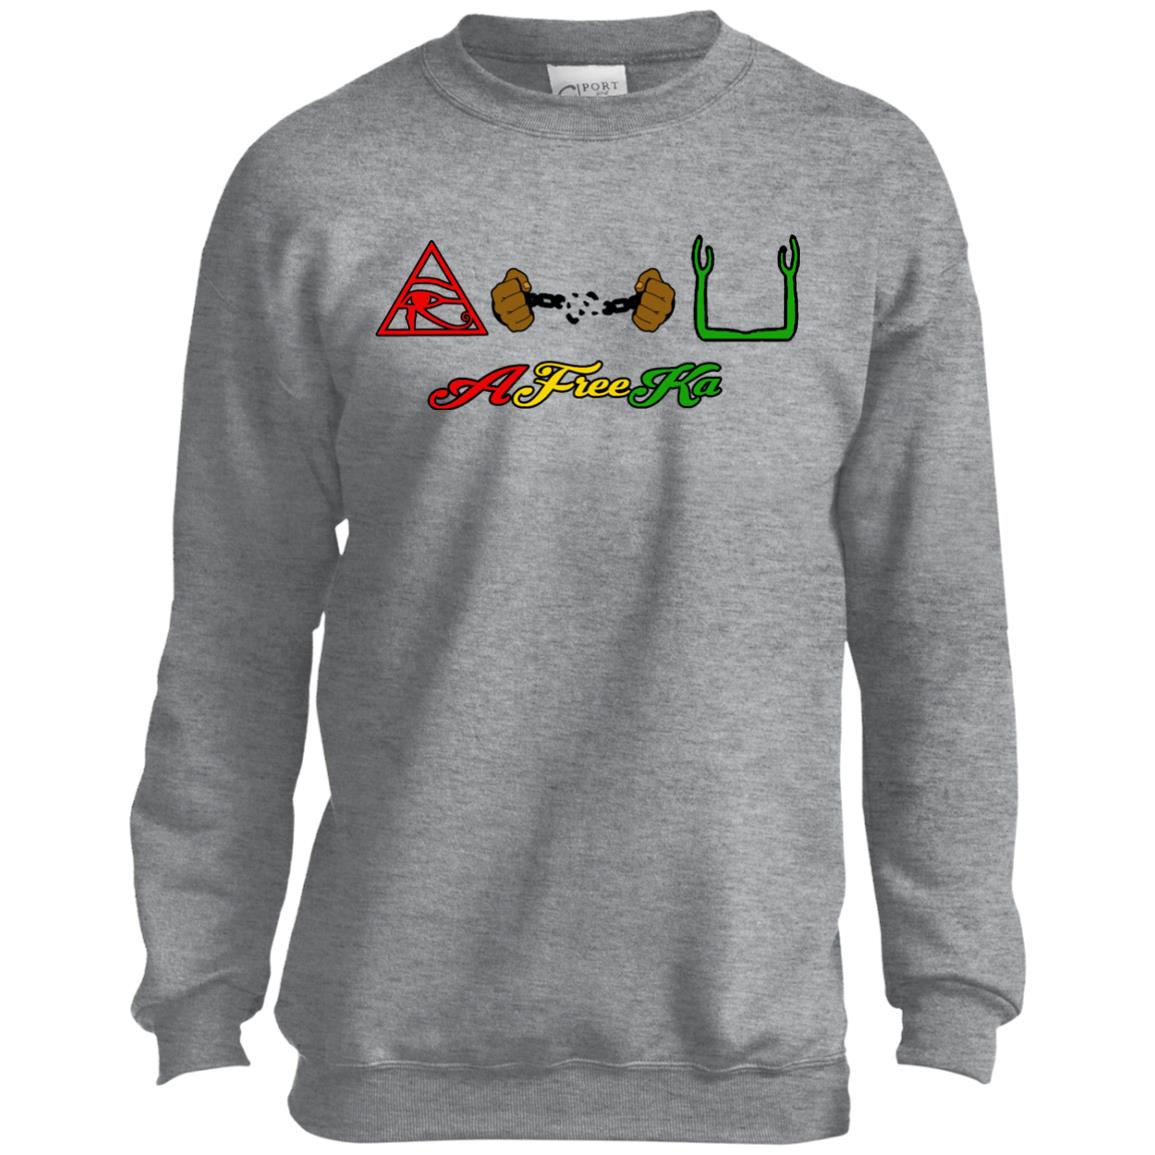 Afreeka Youth Crewneck Sweatshirt